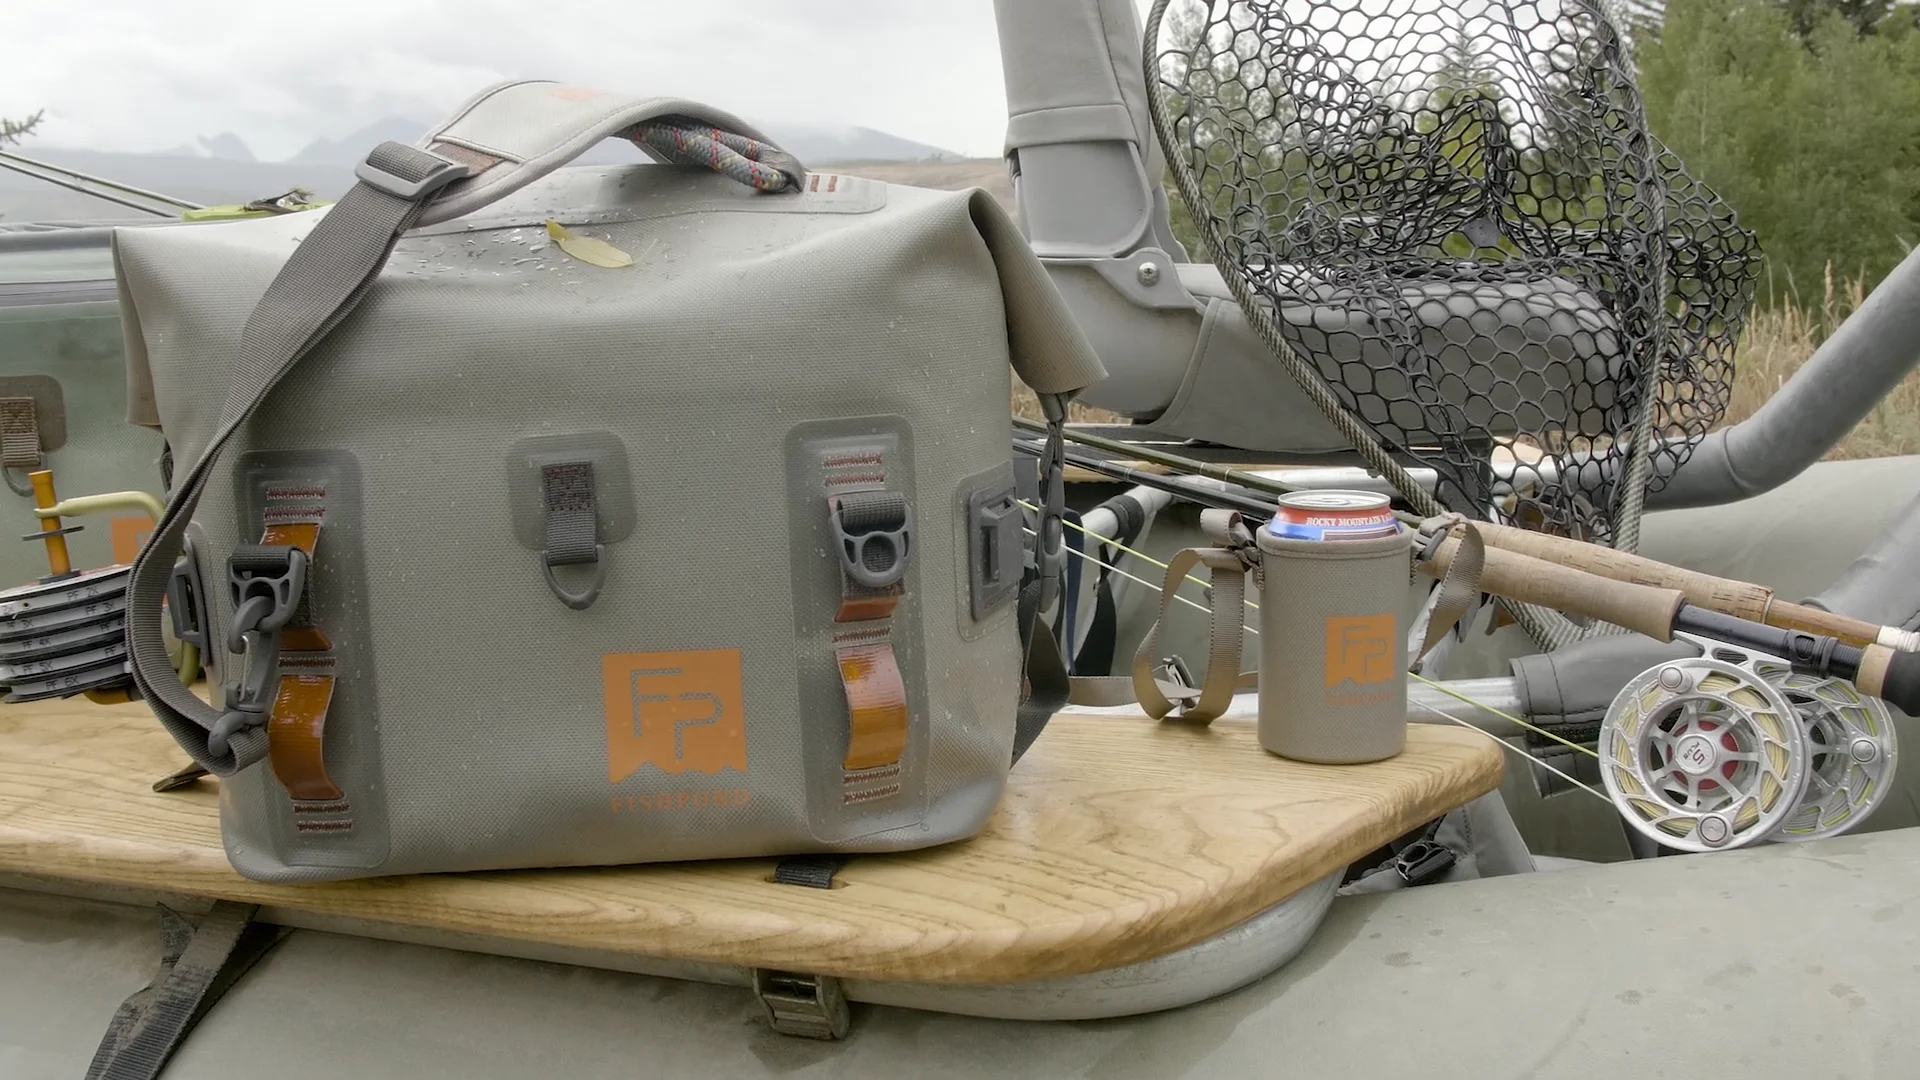 Fishpond Castaway Roll Top Gear Bag on Vimeo